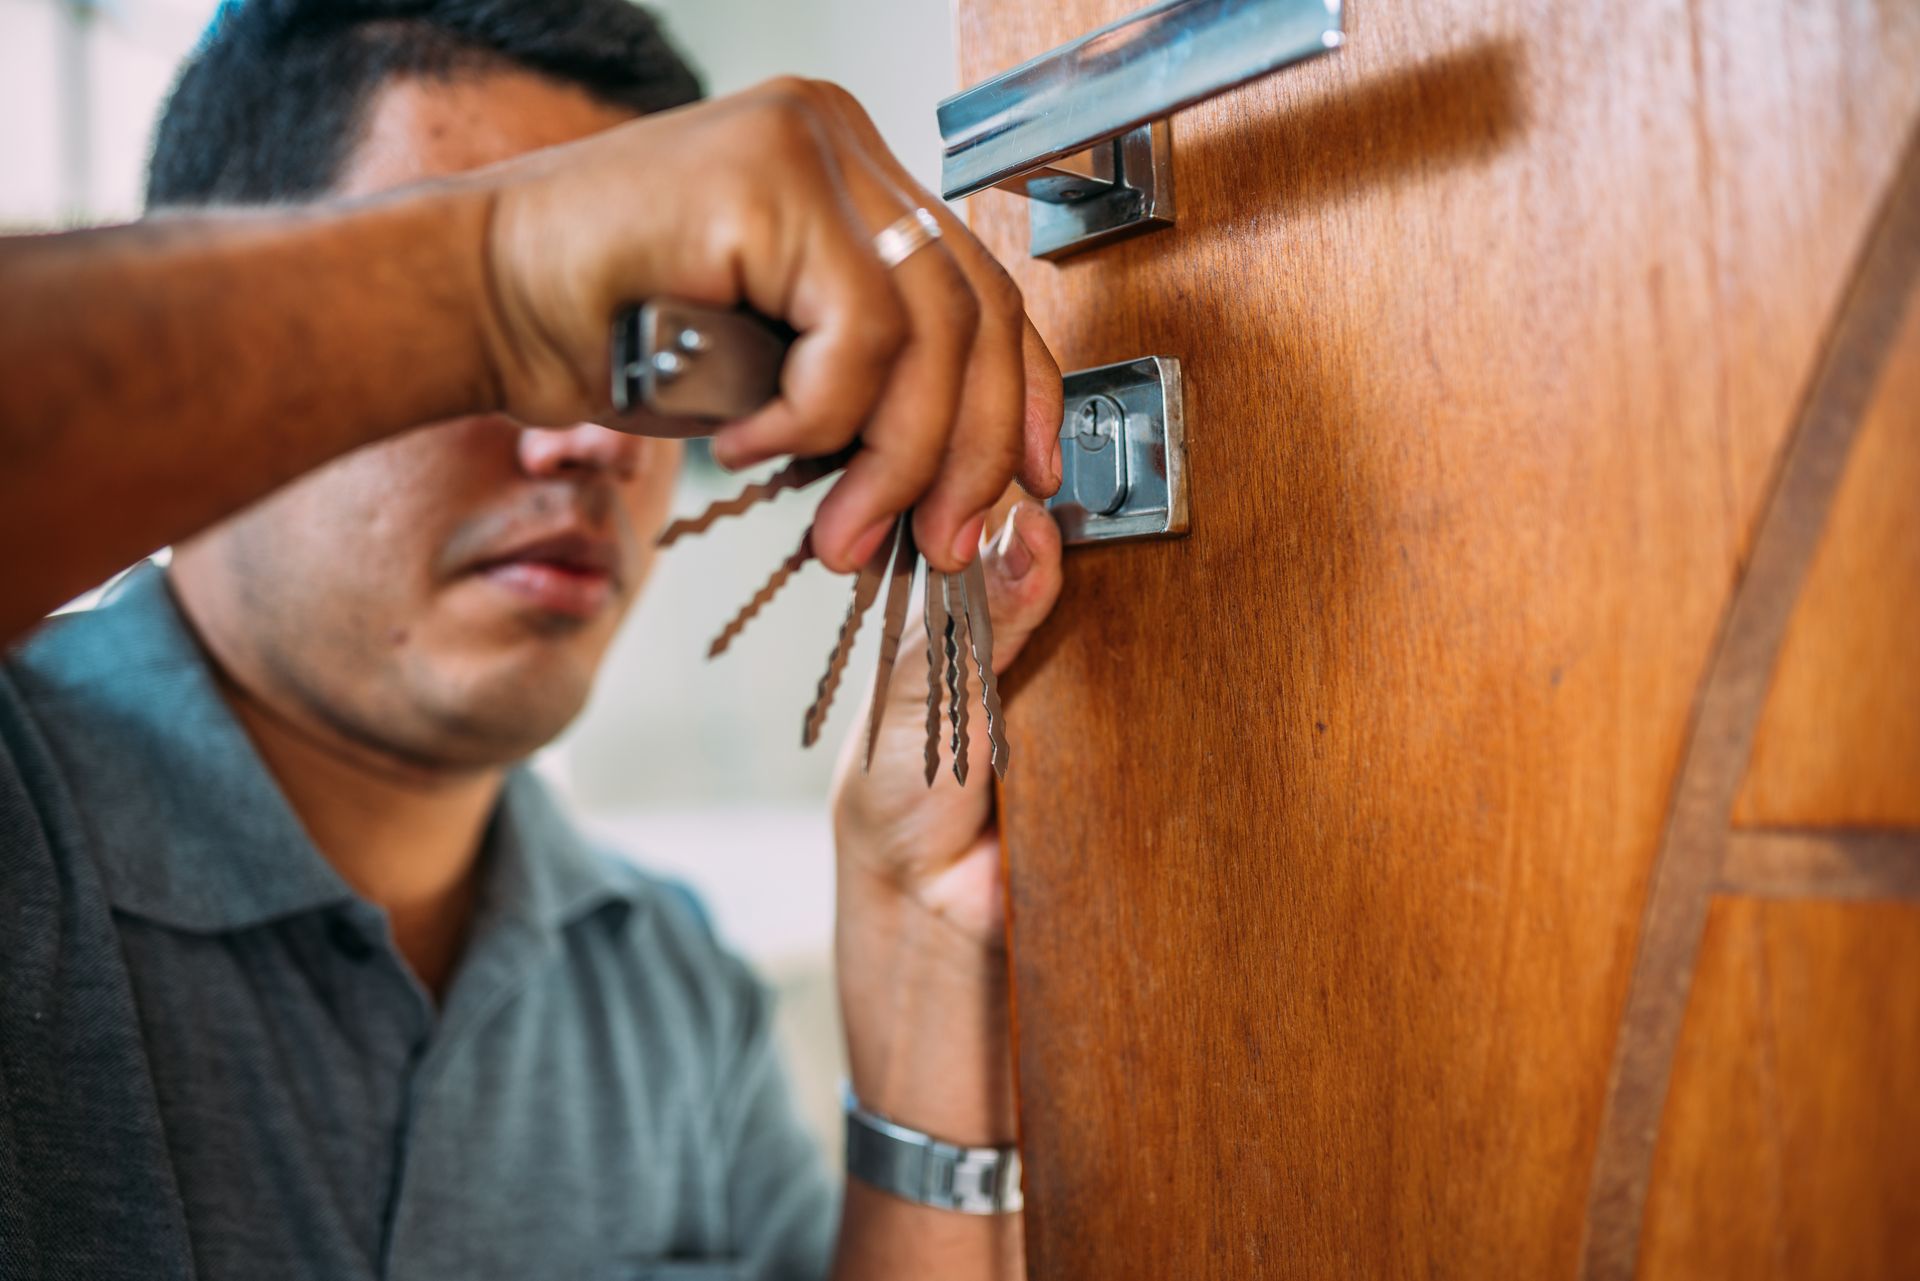 locksmith checking different keys on a door lock